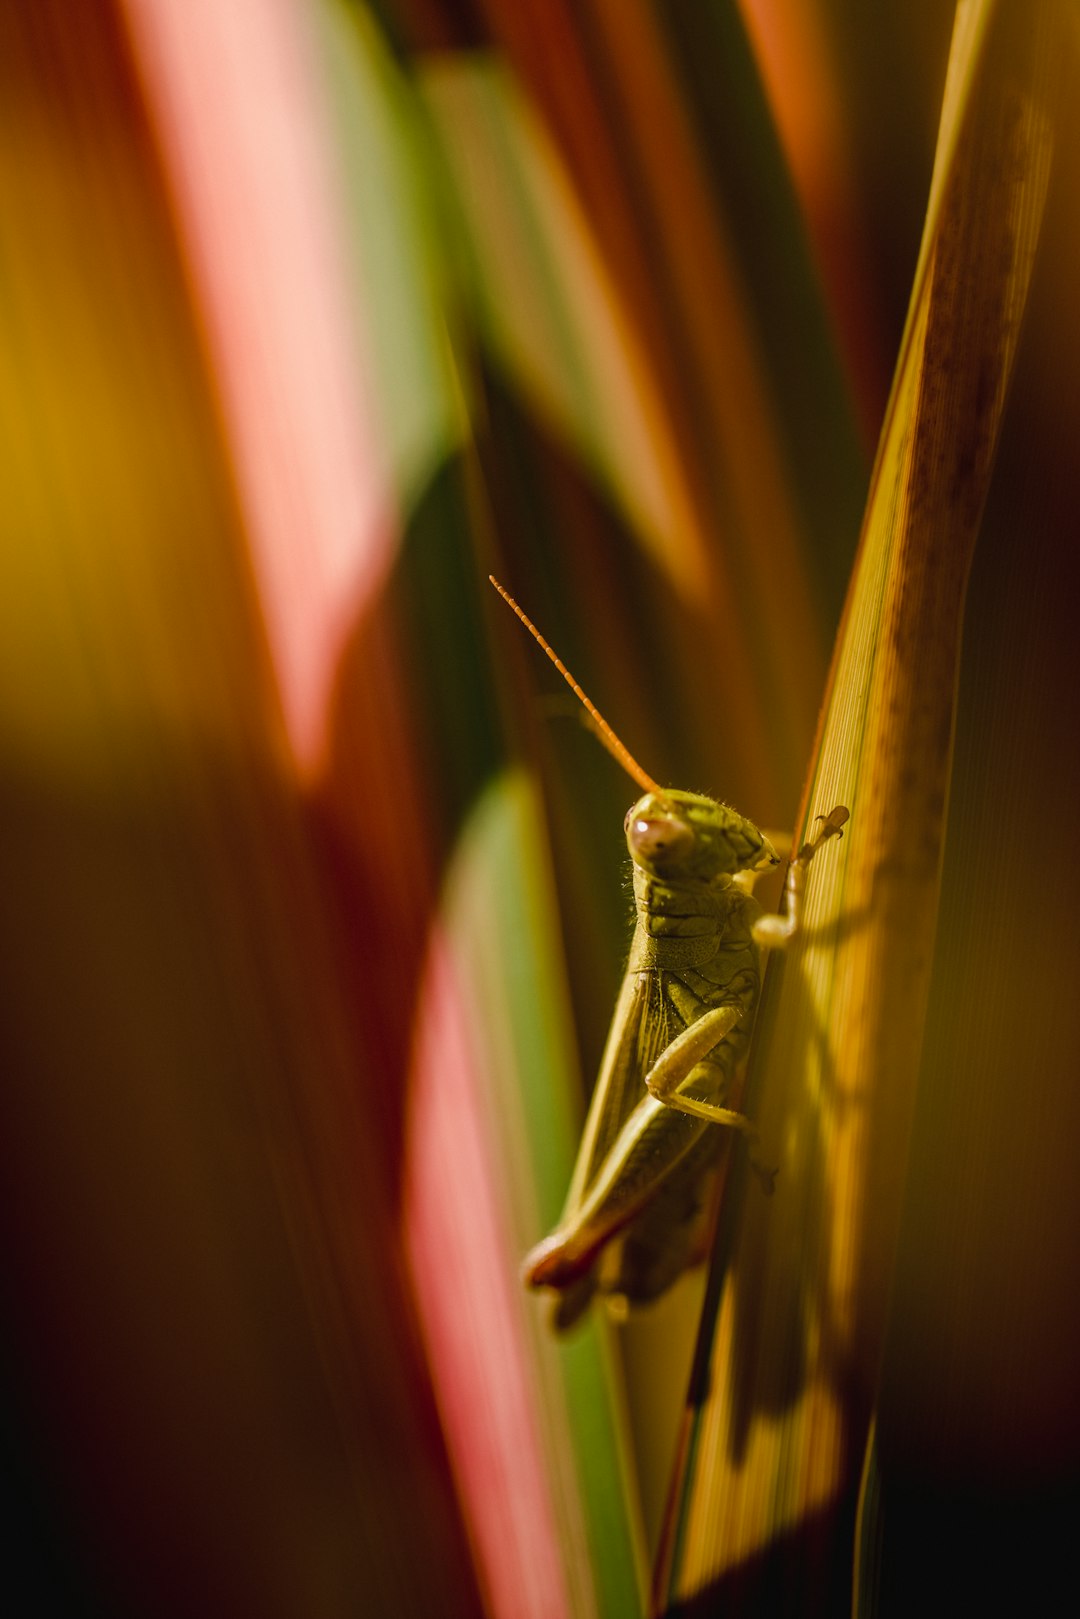 green grasshopper on brown wooden stick